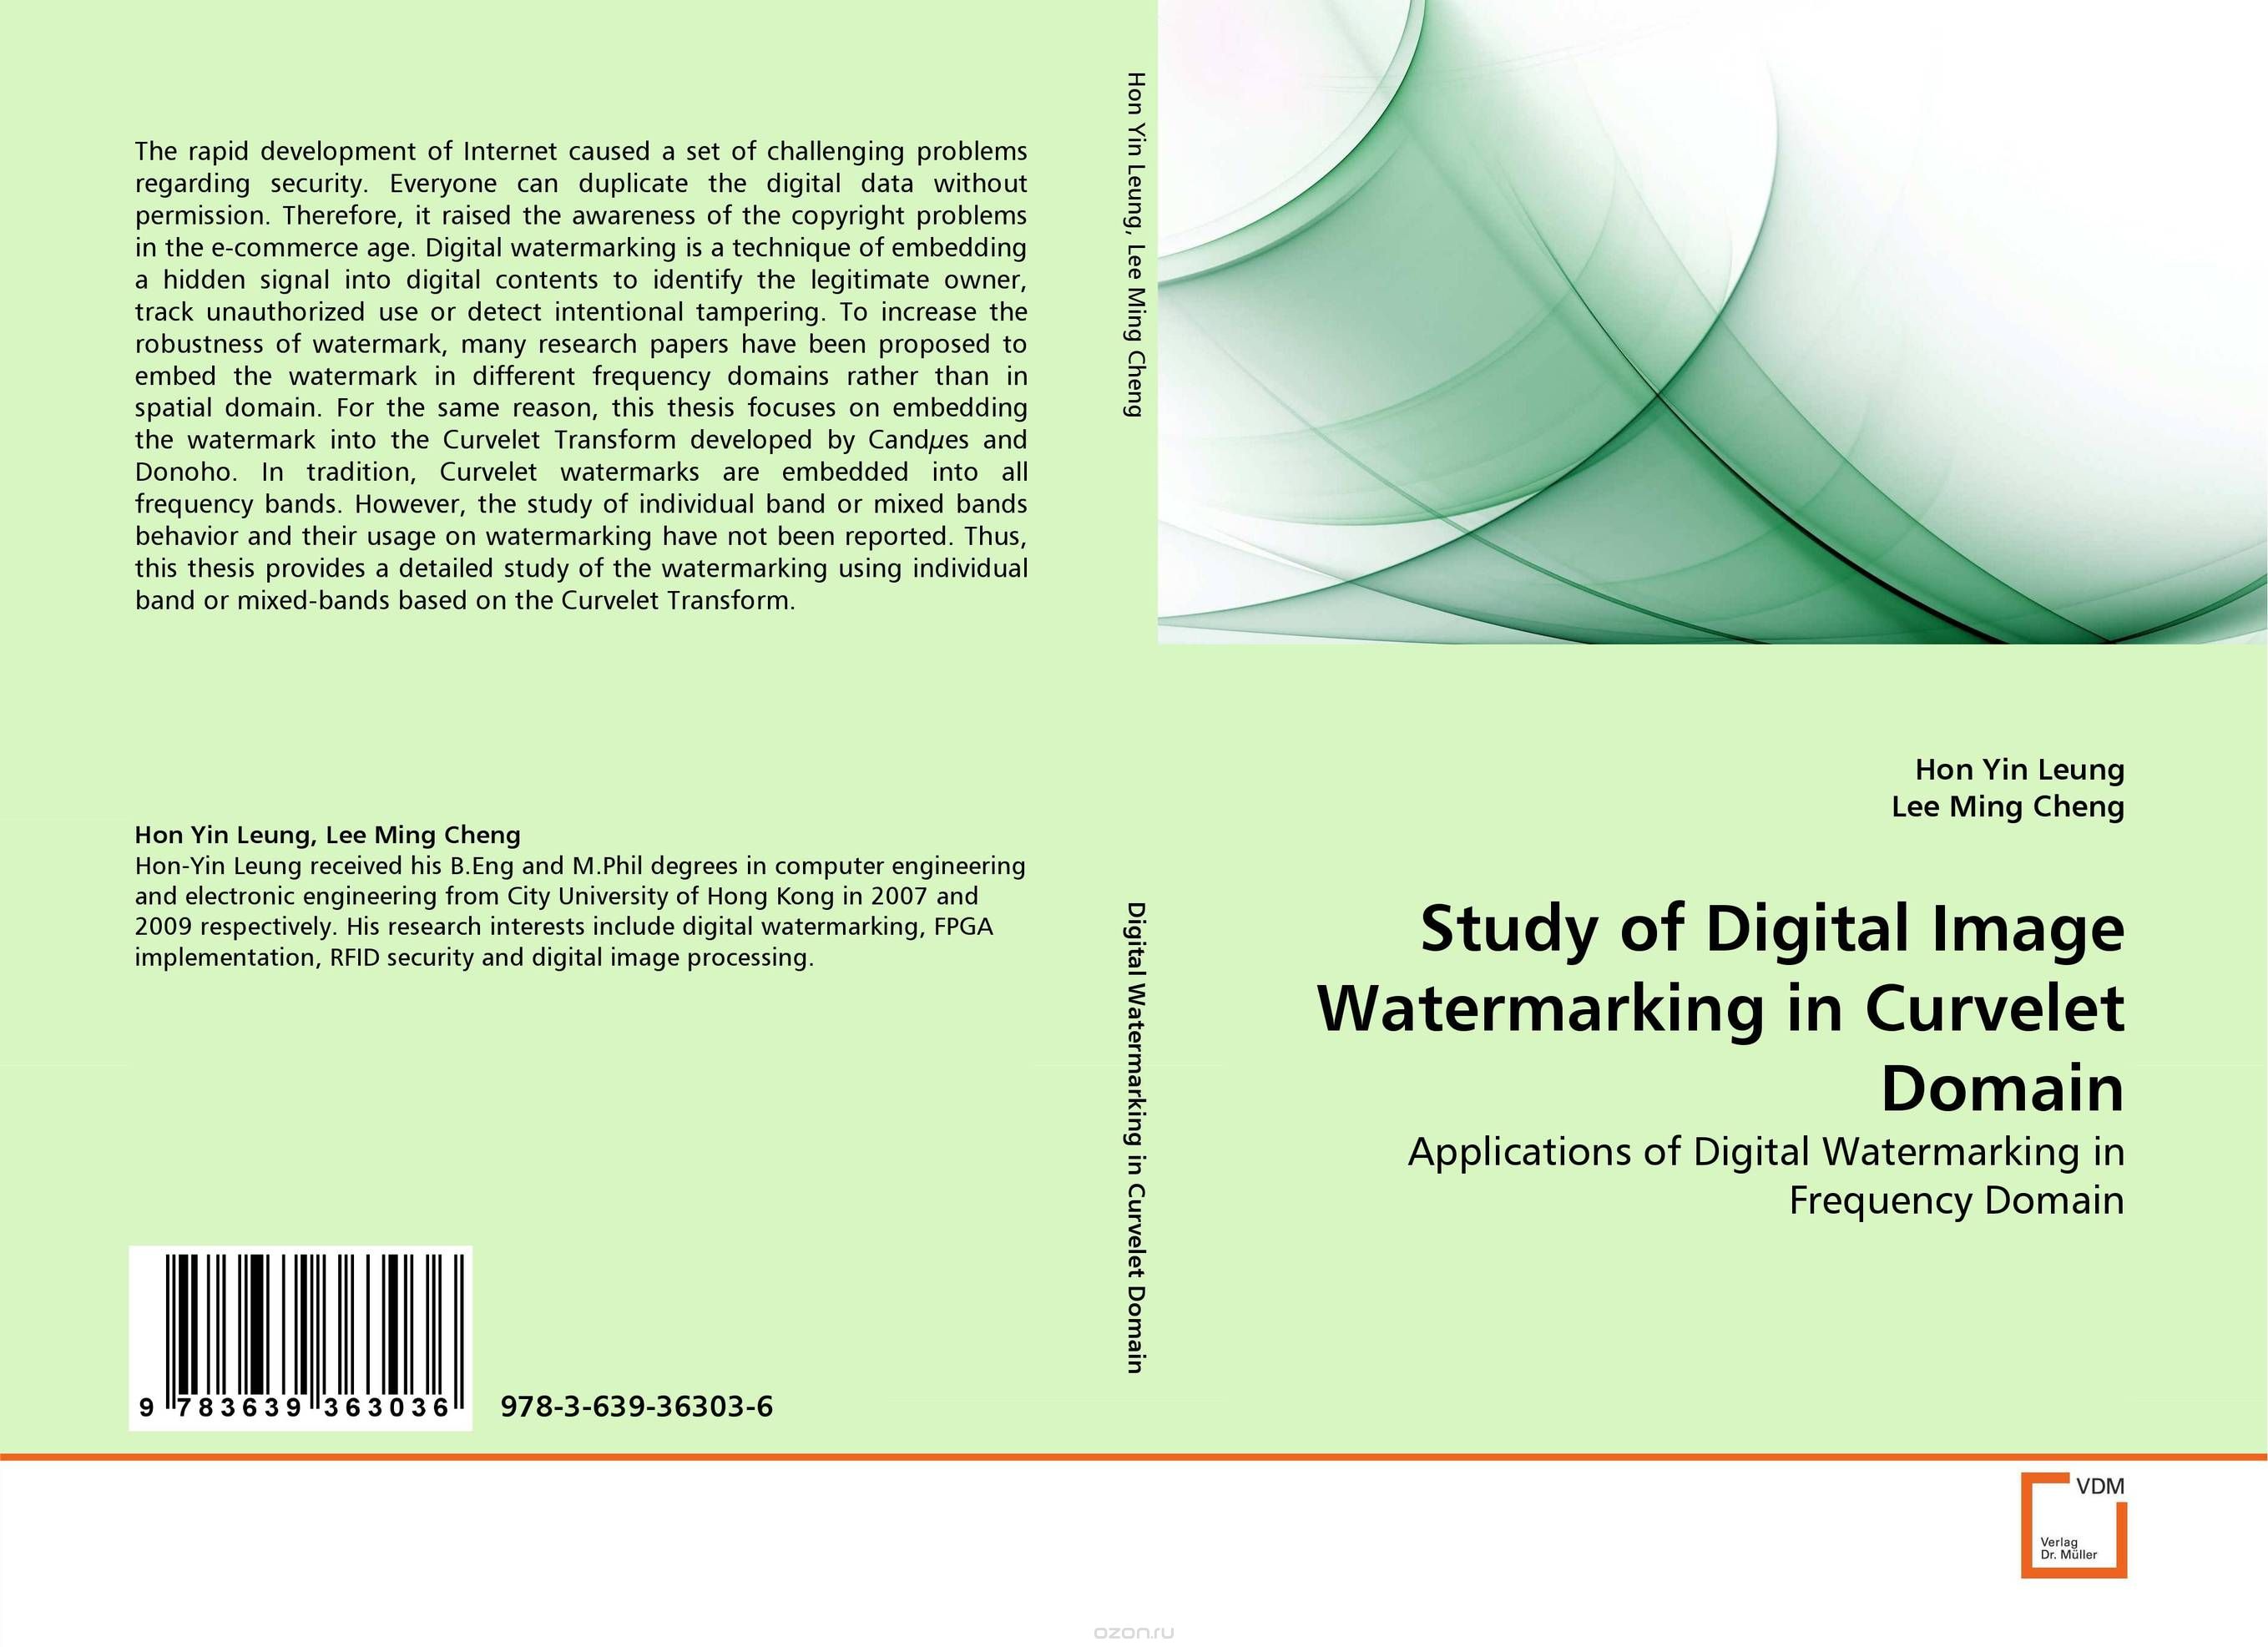 Study of Digital Image Watermarking in Curvelet Domain